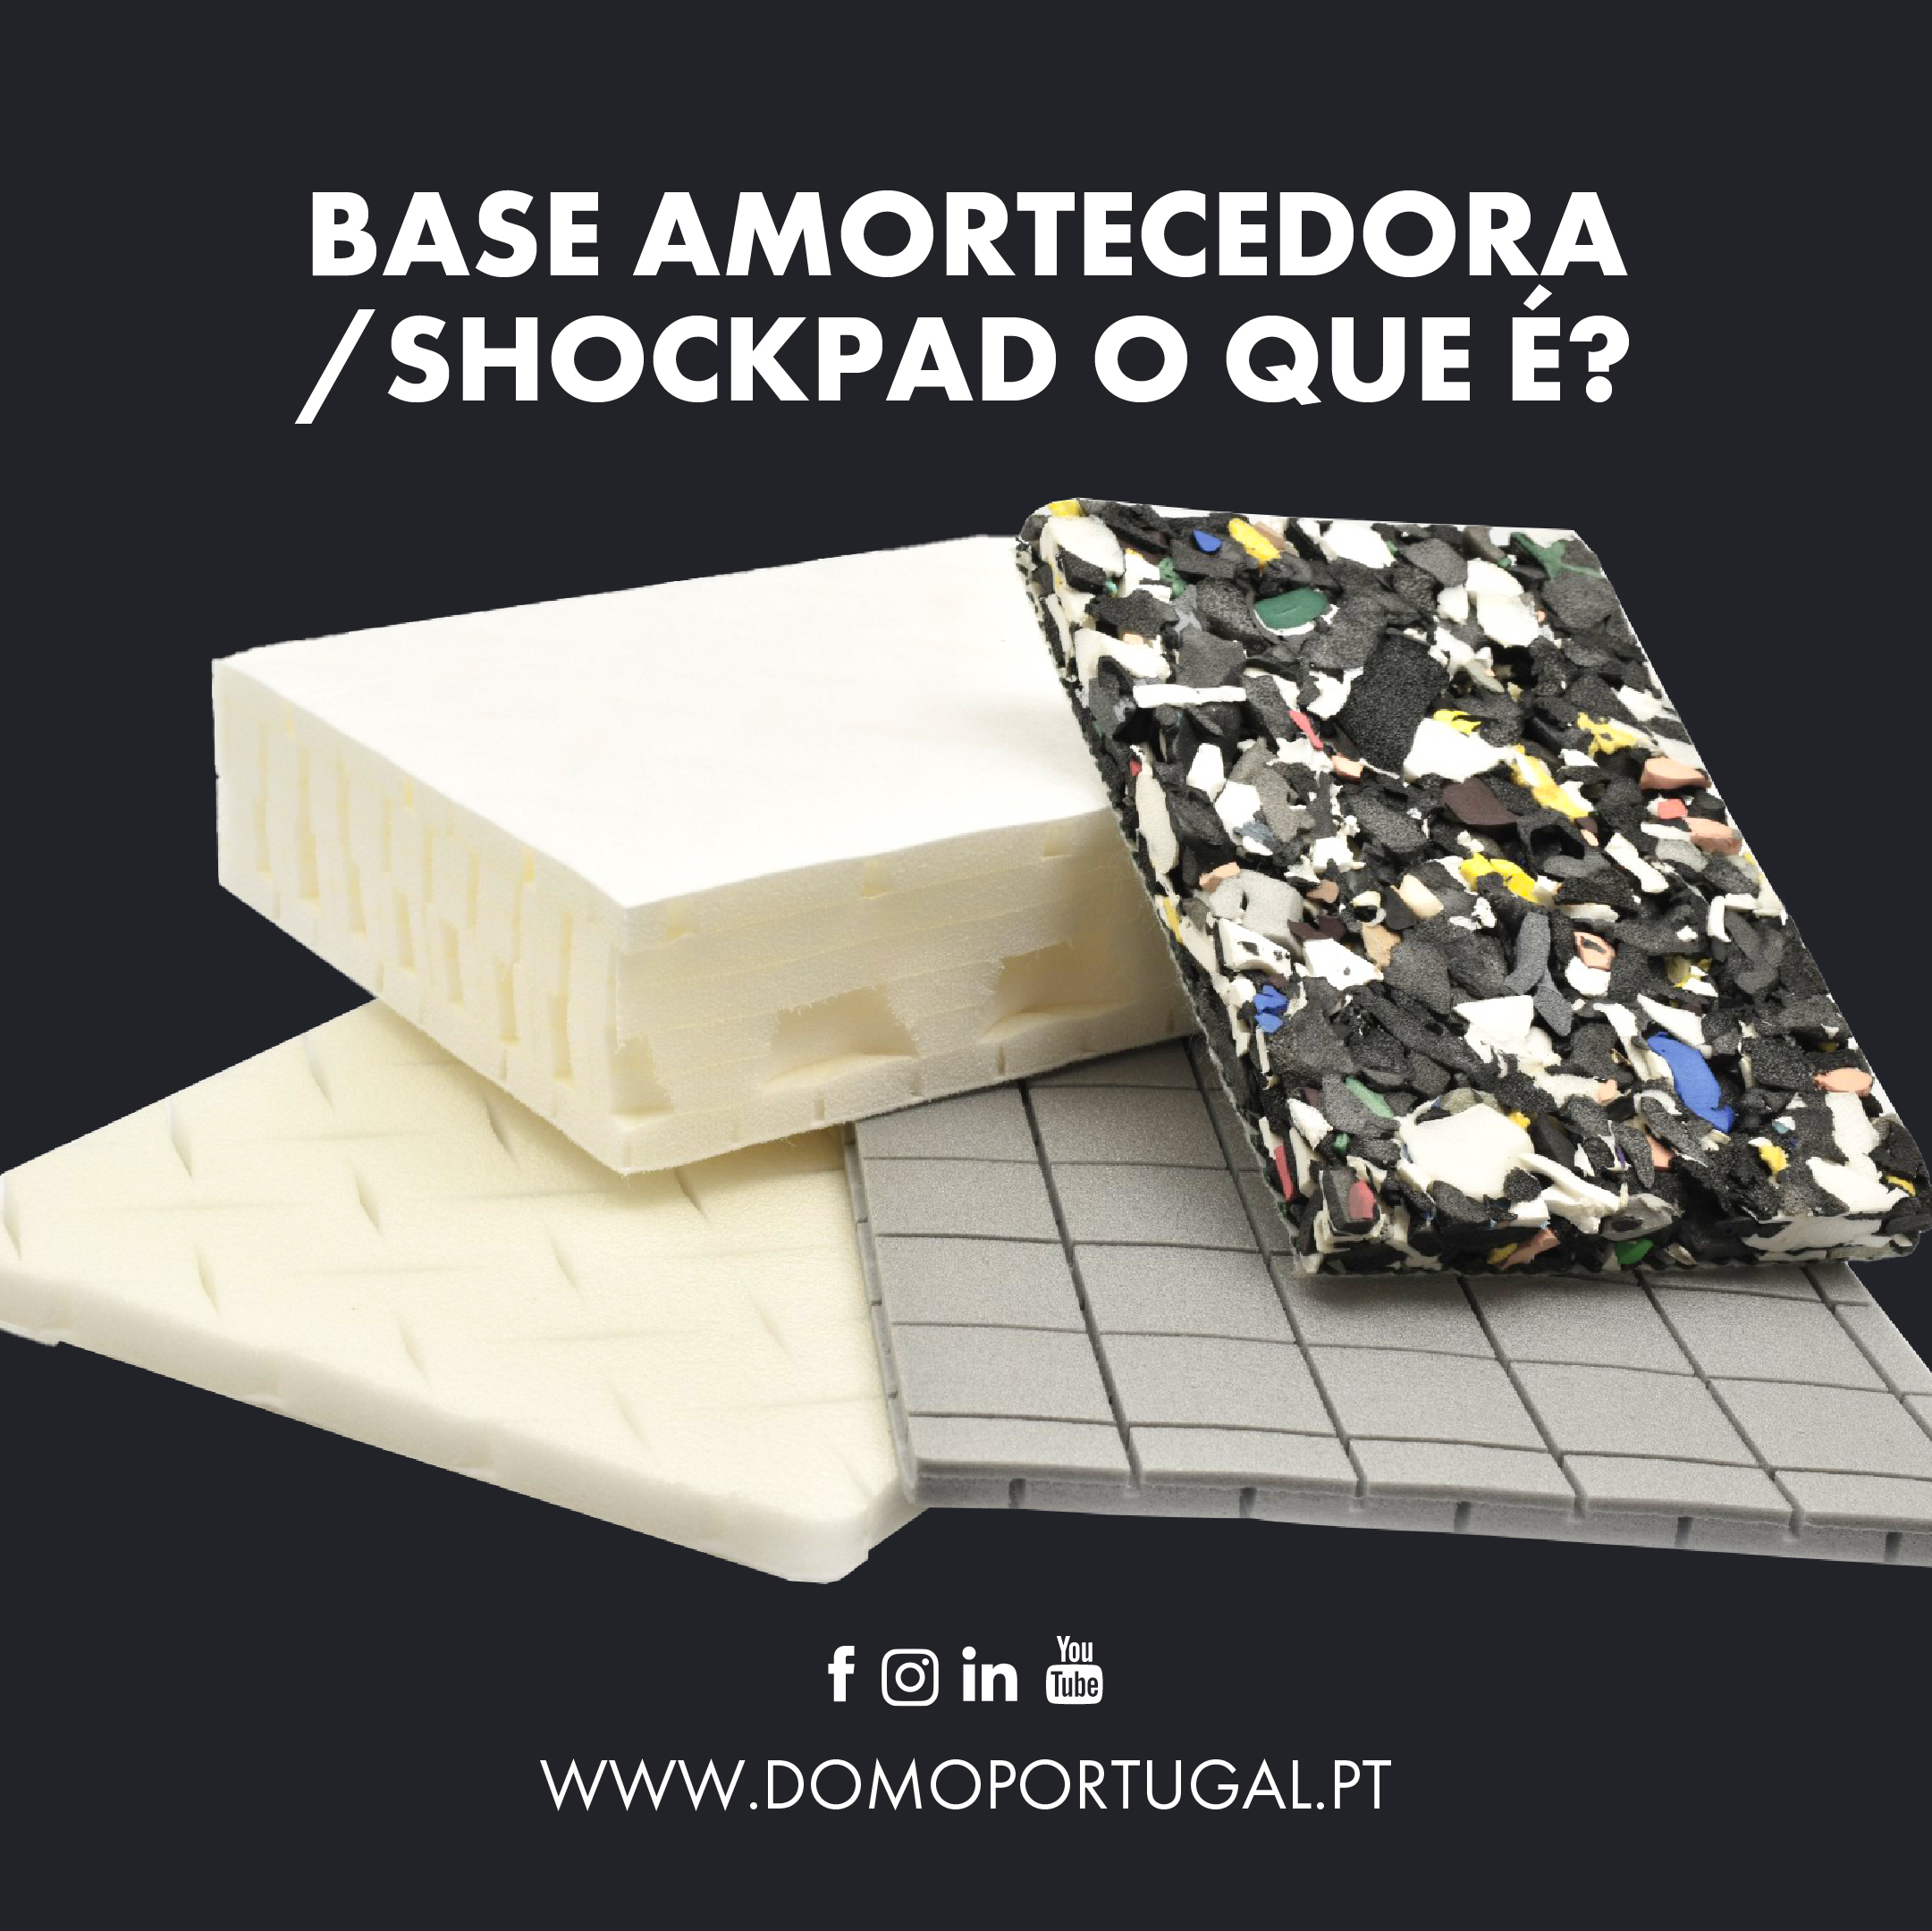 Base Amortecedora/Shockpad: O que é?